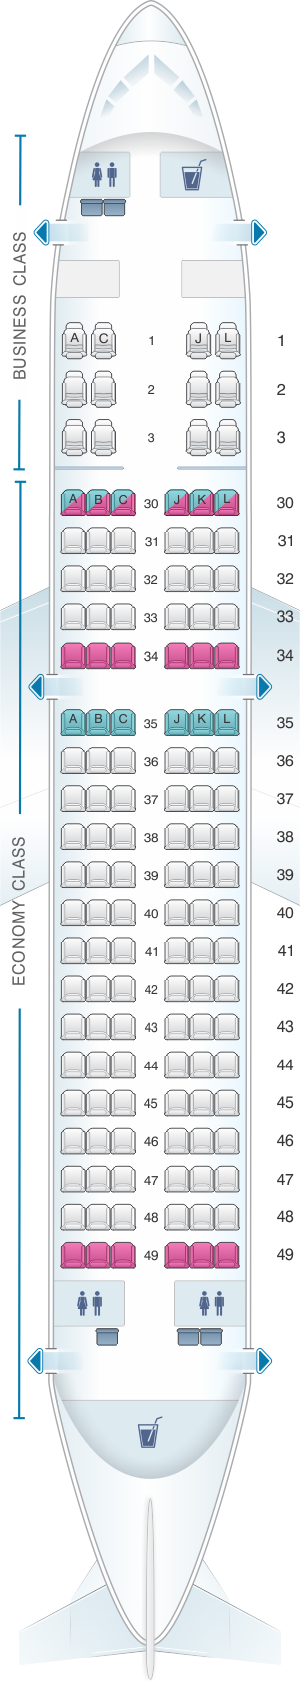 Seat map for Saudi Arabian Airlines Airbus A320 200 Standard